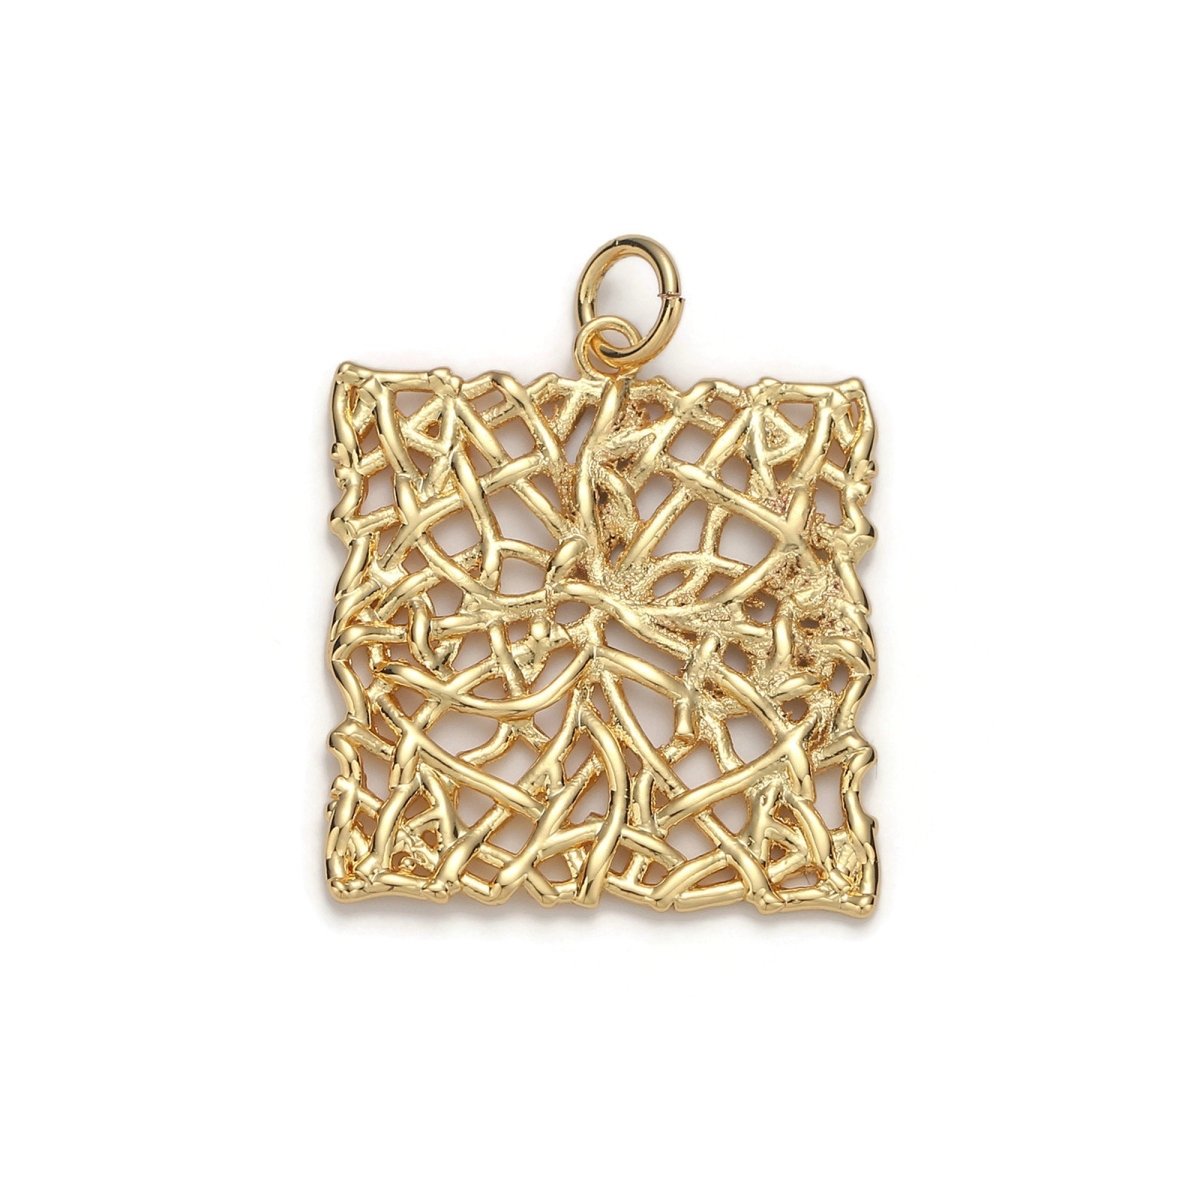 24k Gold Filled Patterned Square Charm, Branch Paisley Pendant Charm, Gold Filled Charm, For DIY Jewelry, Gold Color D-054 - DLUXCA